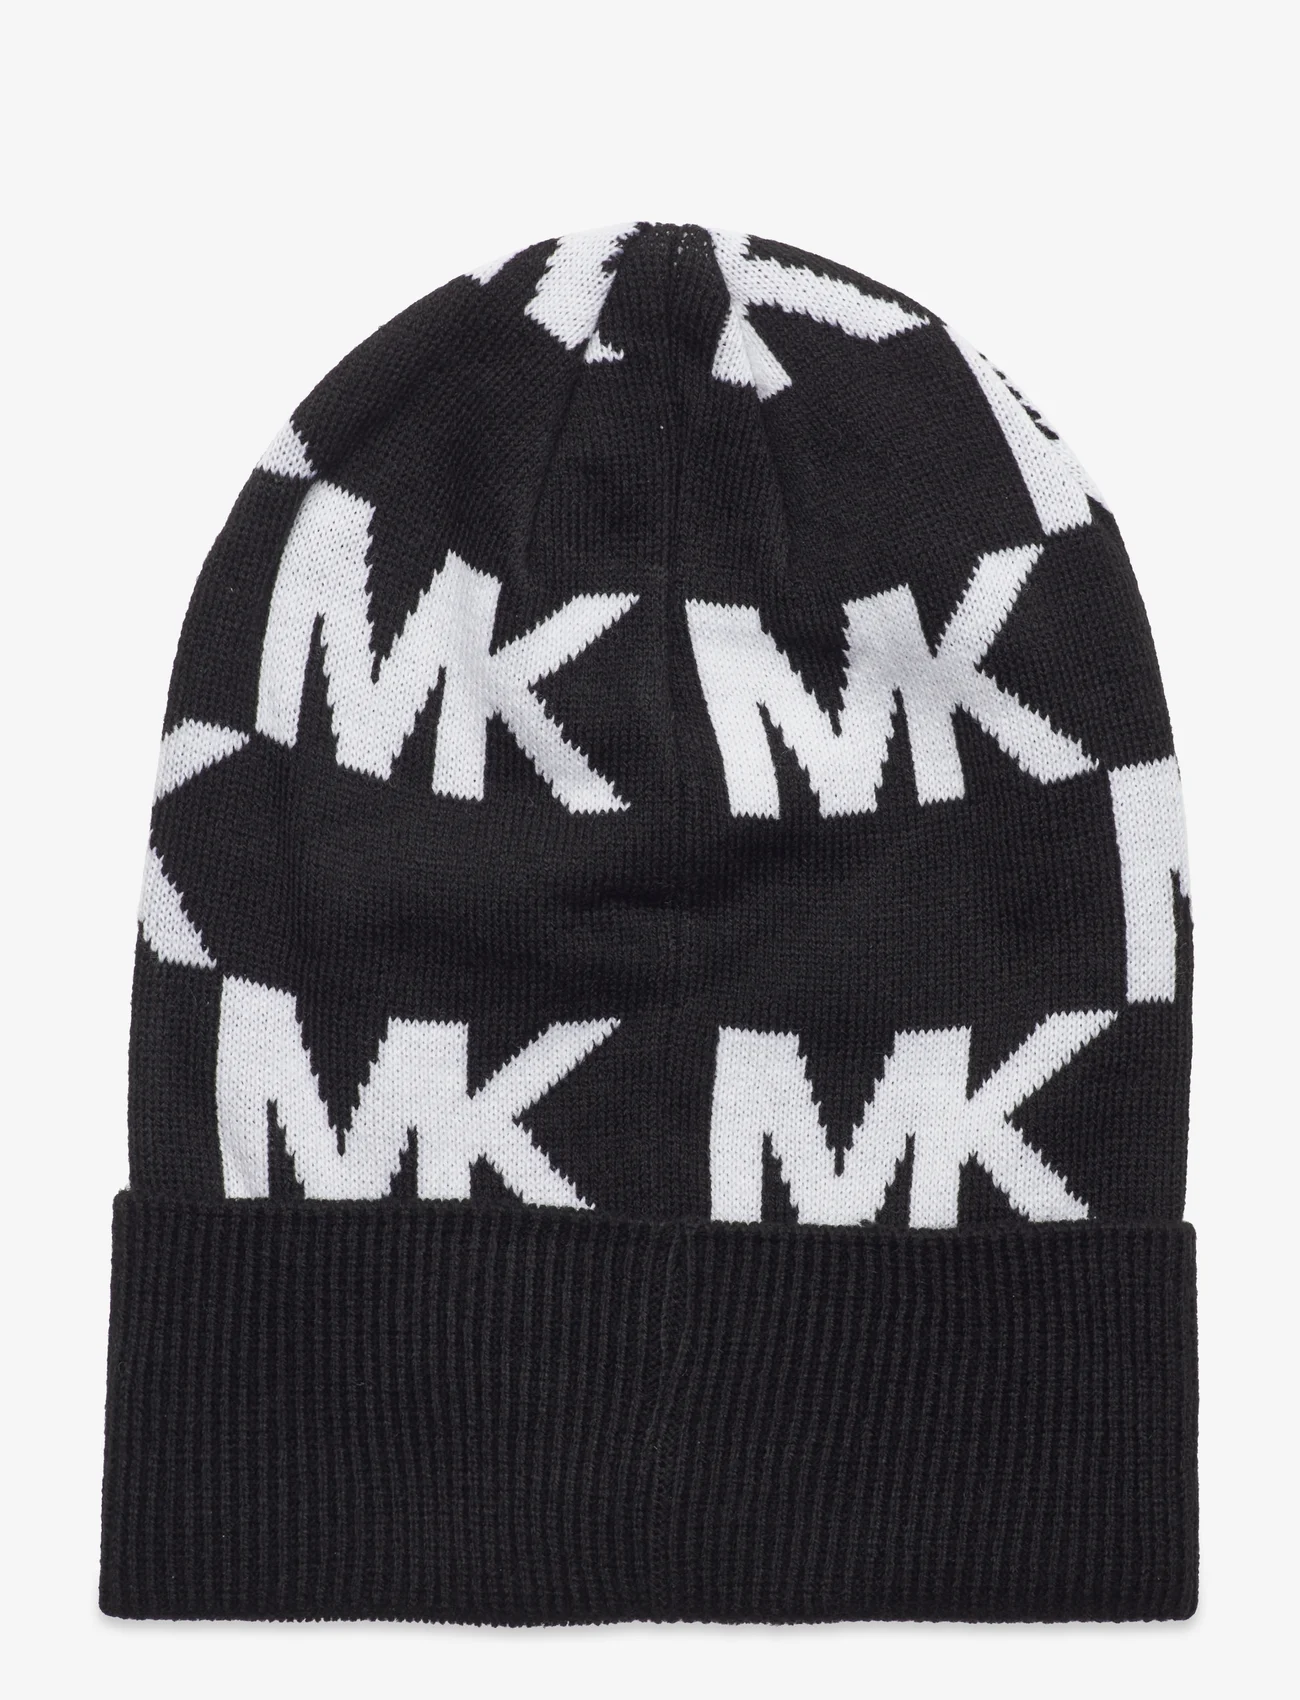 Michael Kors Accessories - Oversized chess mk cuff hat - mössor - black, cream - 1